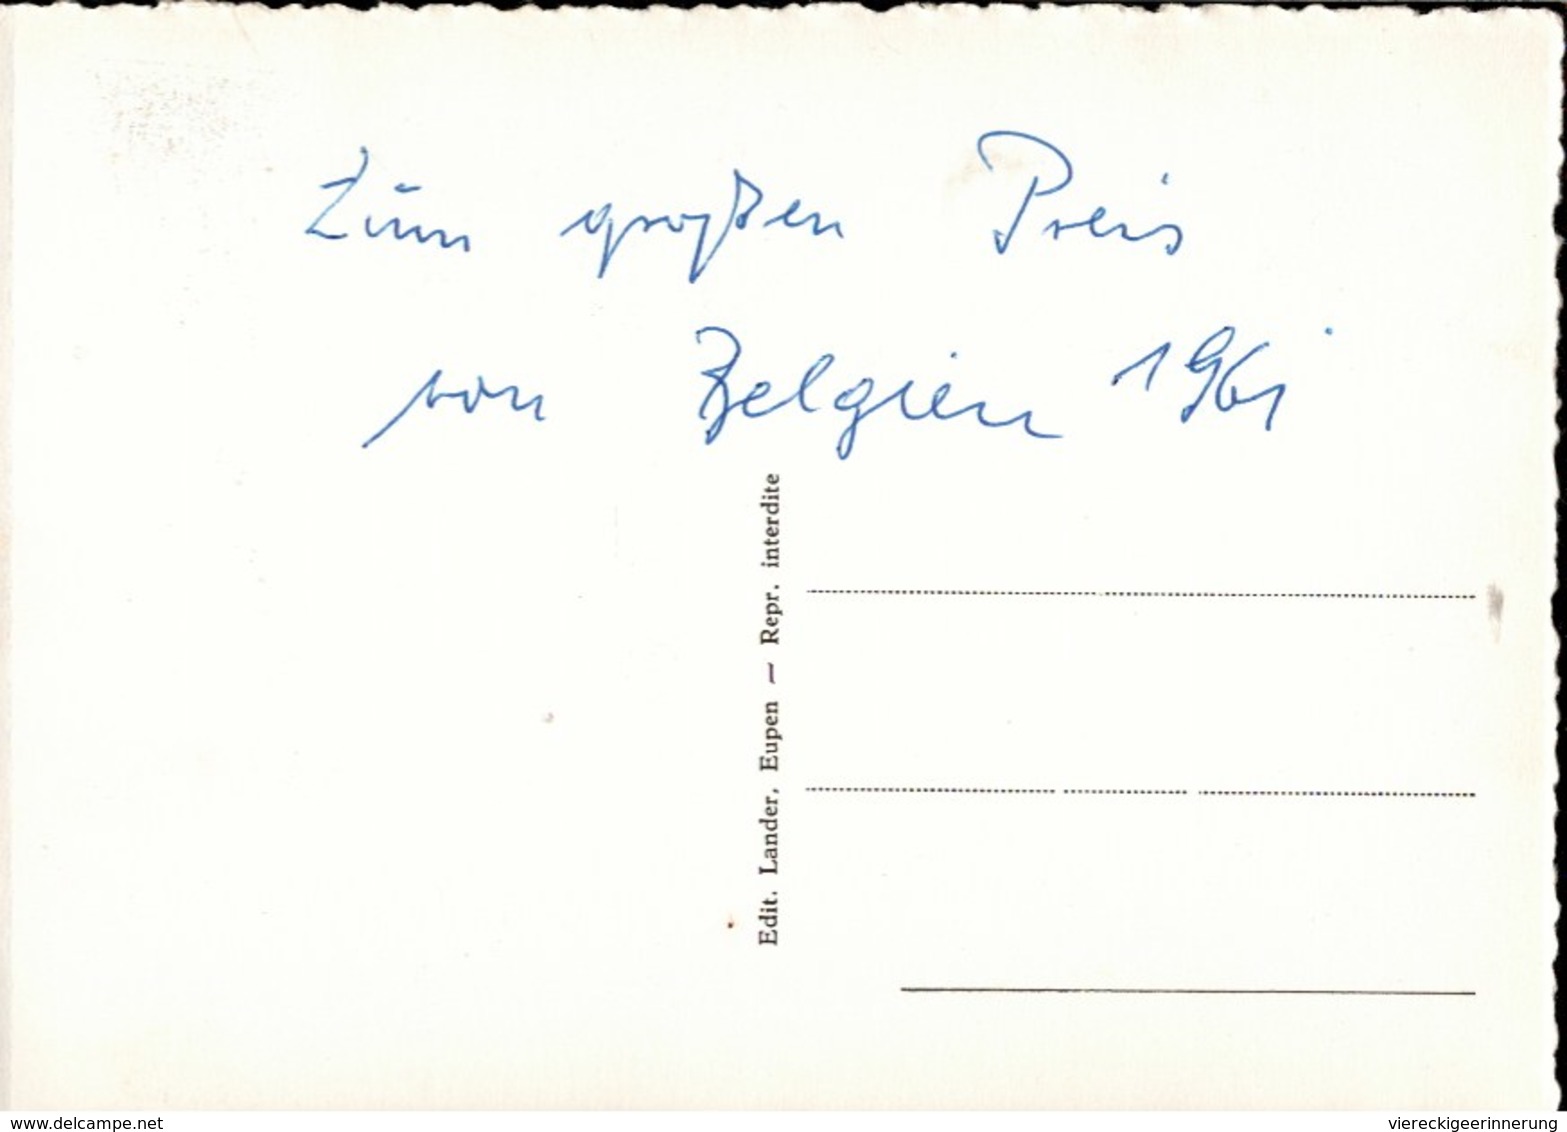 ! Alte Ansichtskarte Souvenir D' Eupen, Kirche, 1961 - Eupen